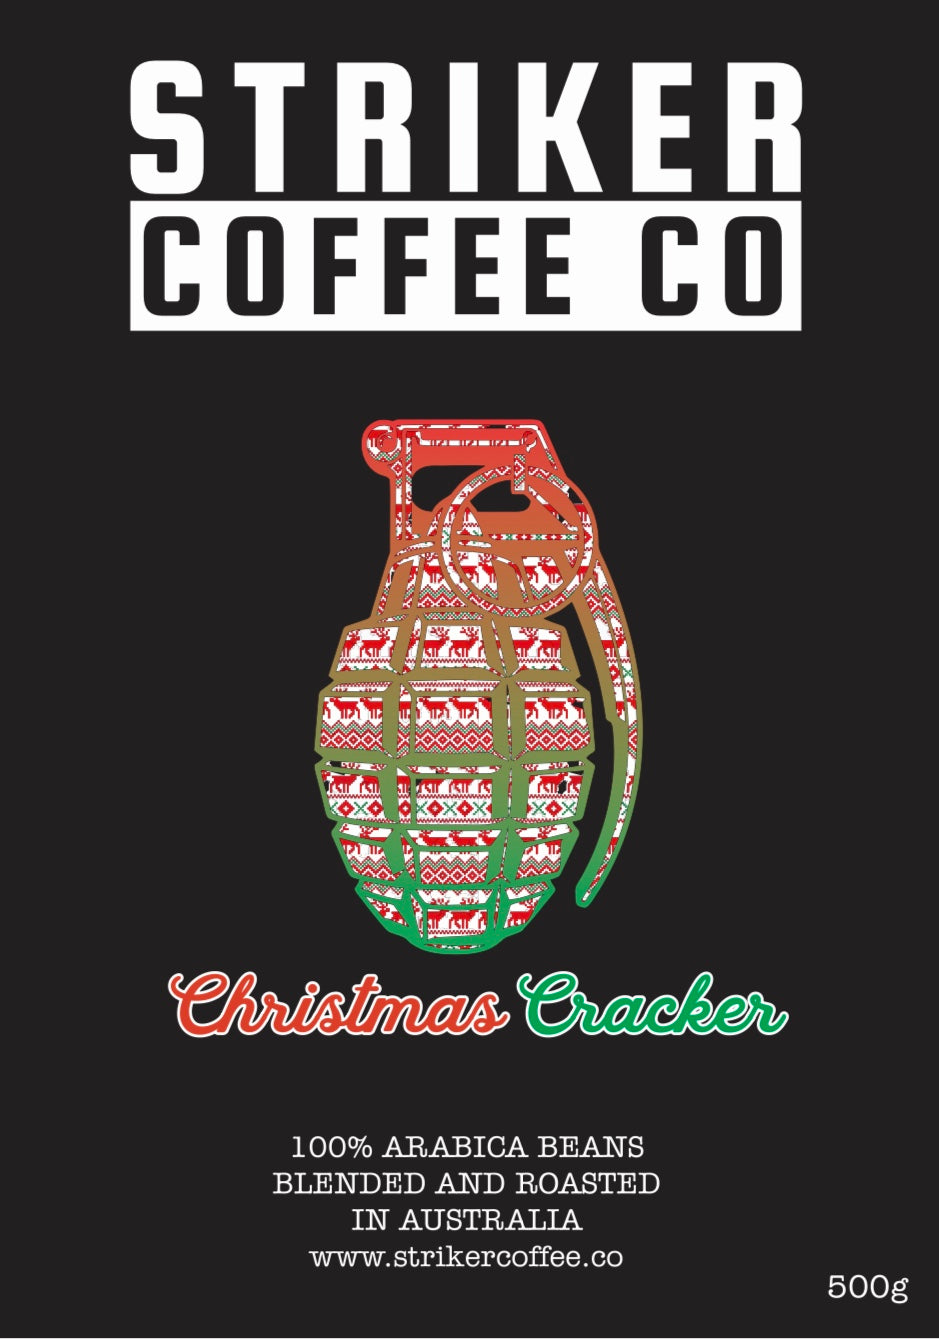 A CHRISTMAS COFFEE